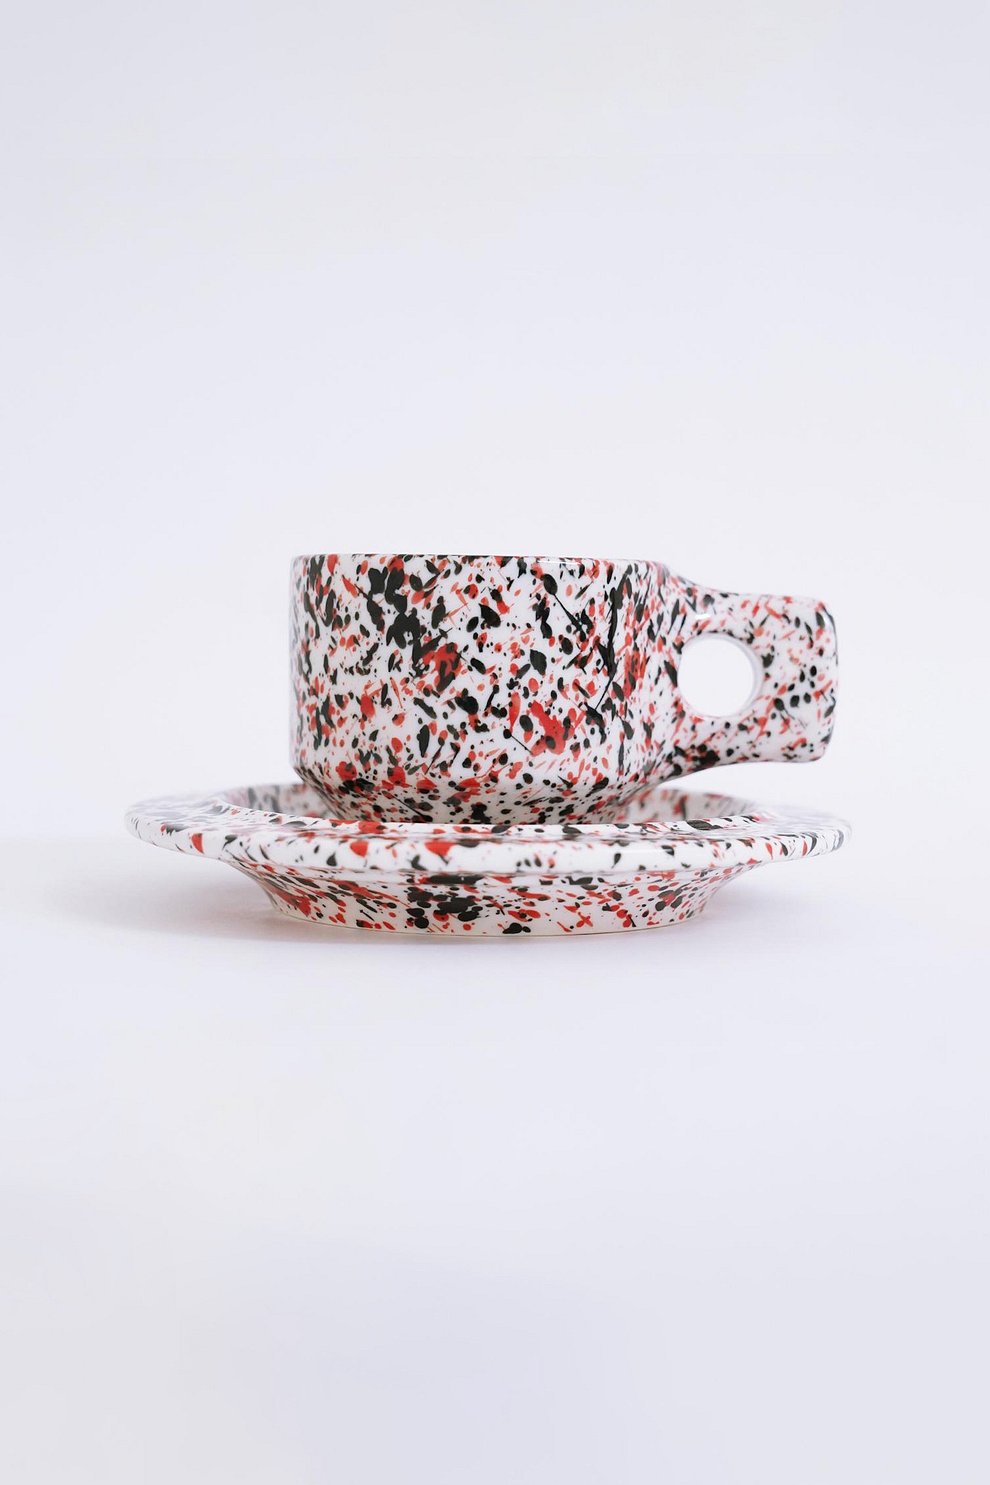 [Fabrik Pottery] 스플래쉬 플랫 컵 & 소서 세트 Red & Black (BOONTHESHOP Exclusive)